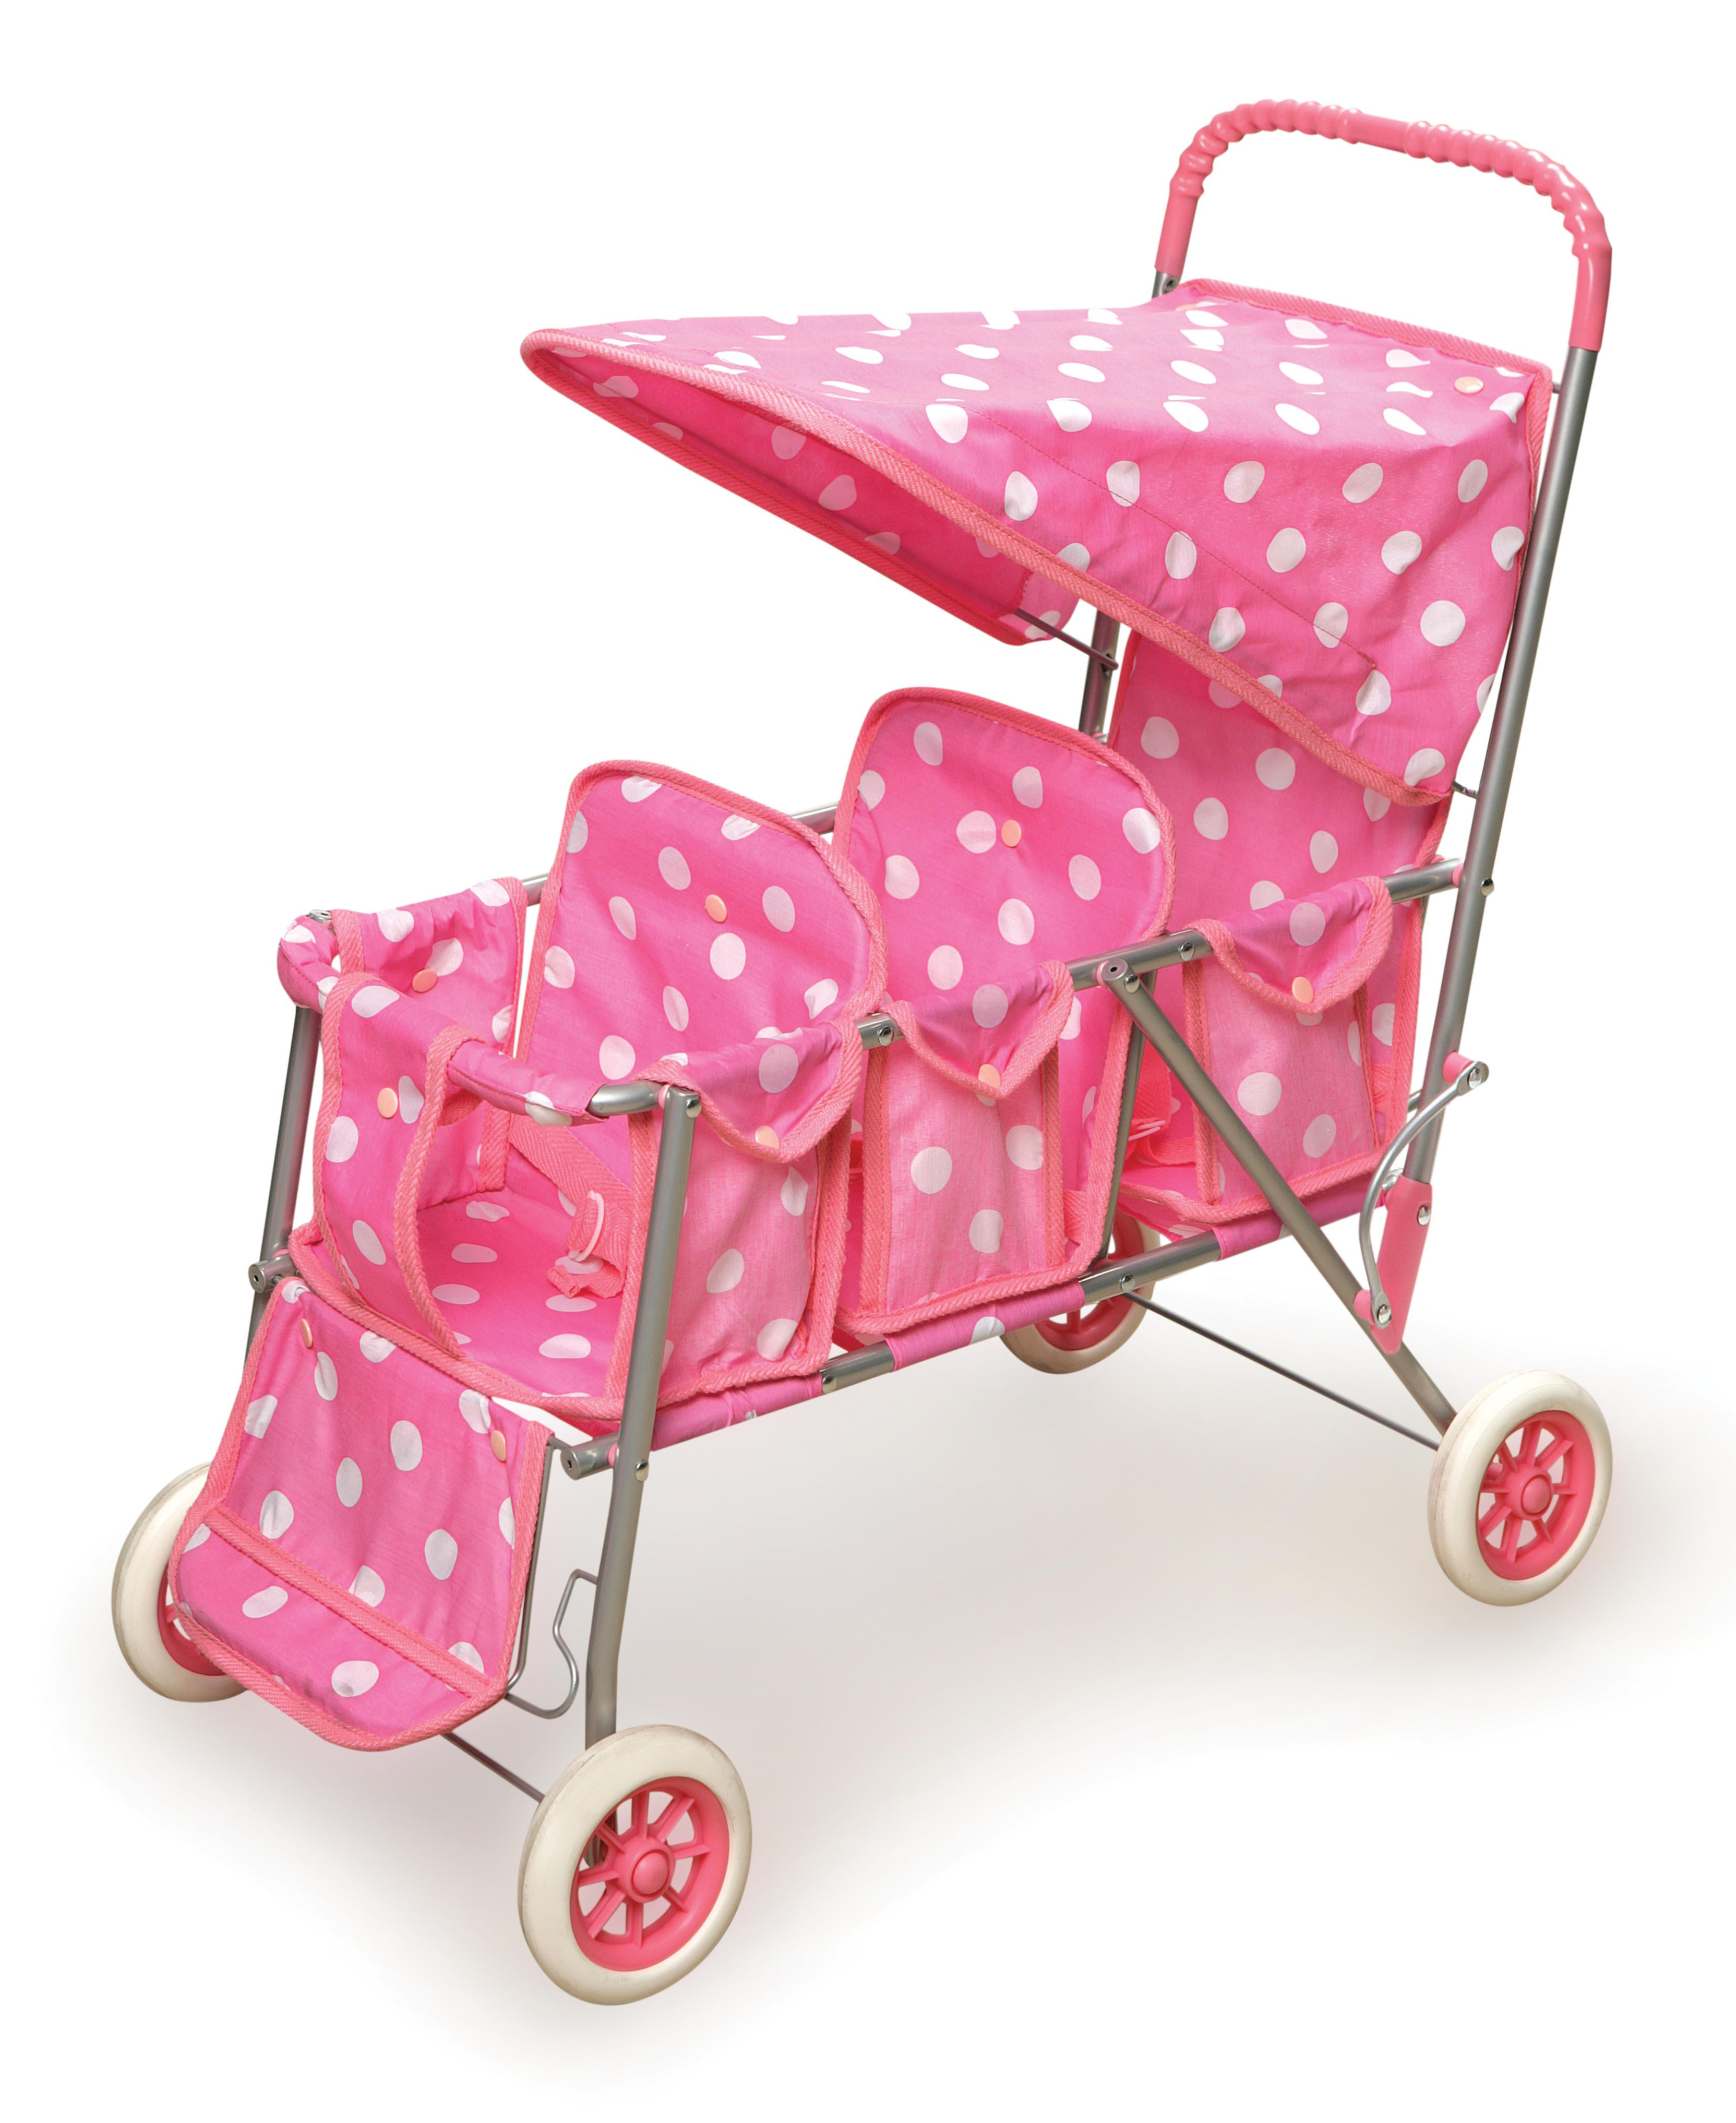 Folding Triple Doll Stroller - Pink/Polka Dots